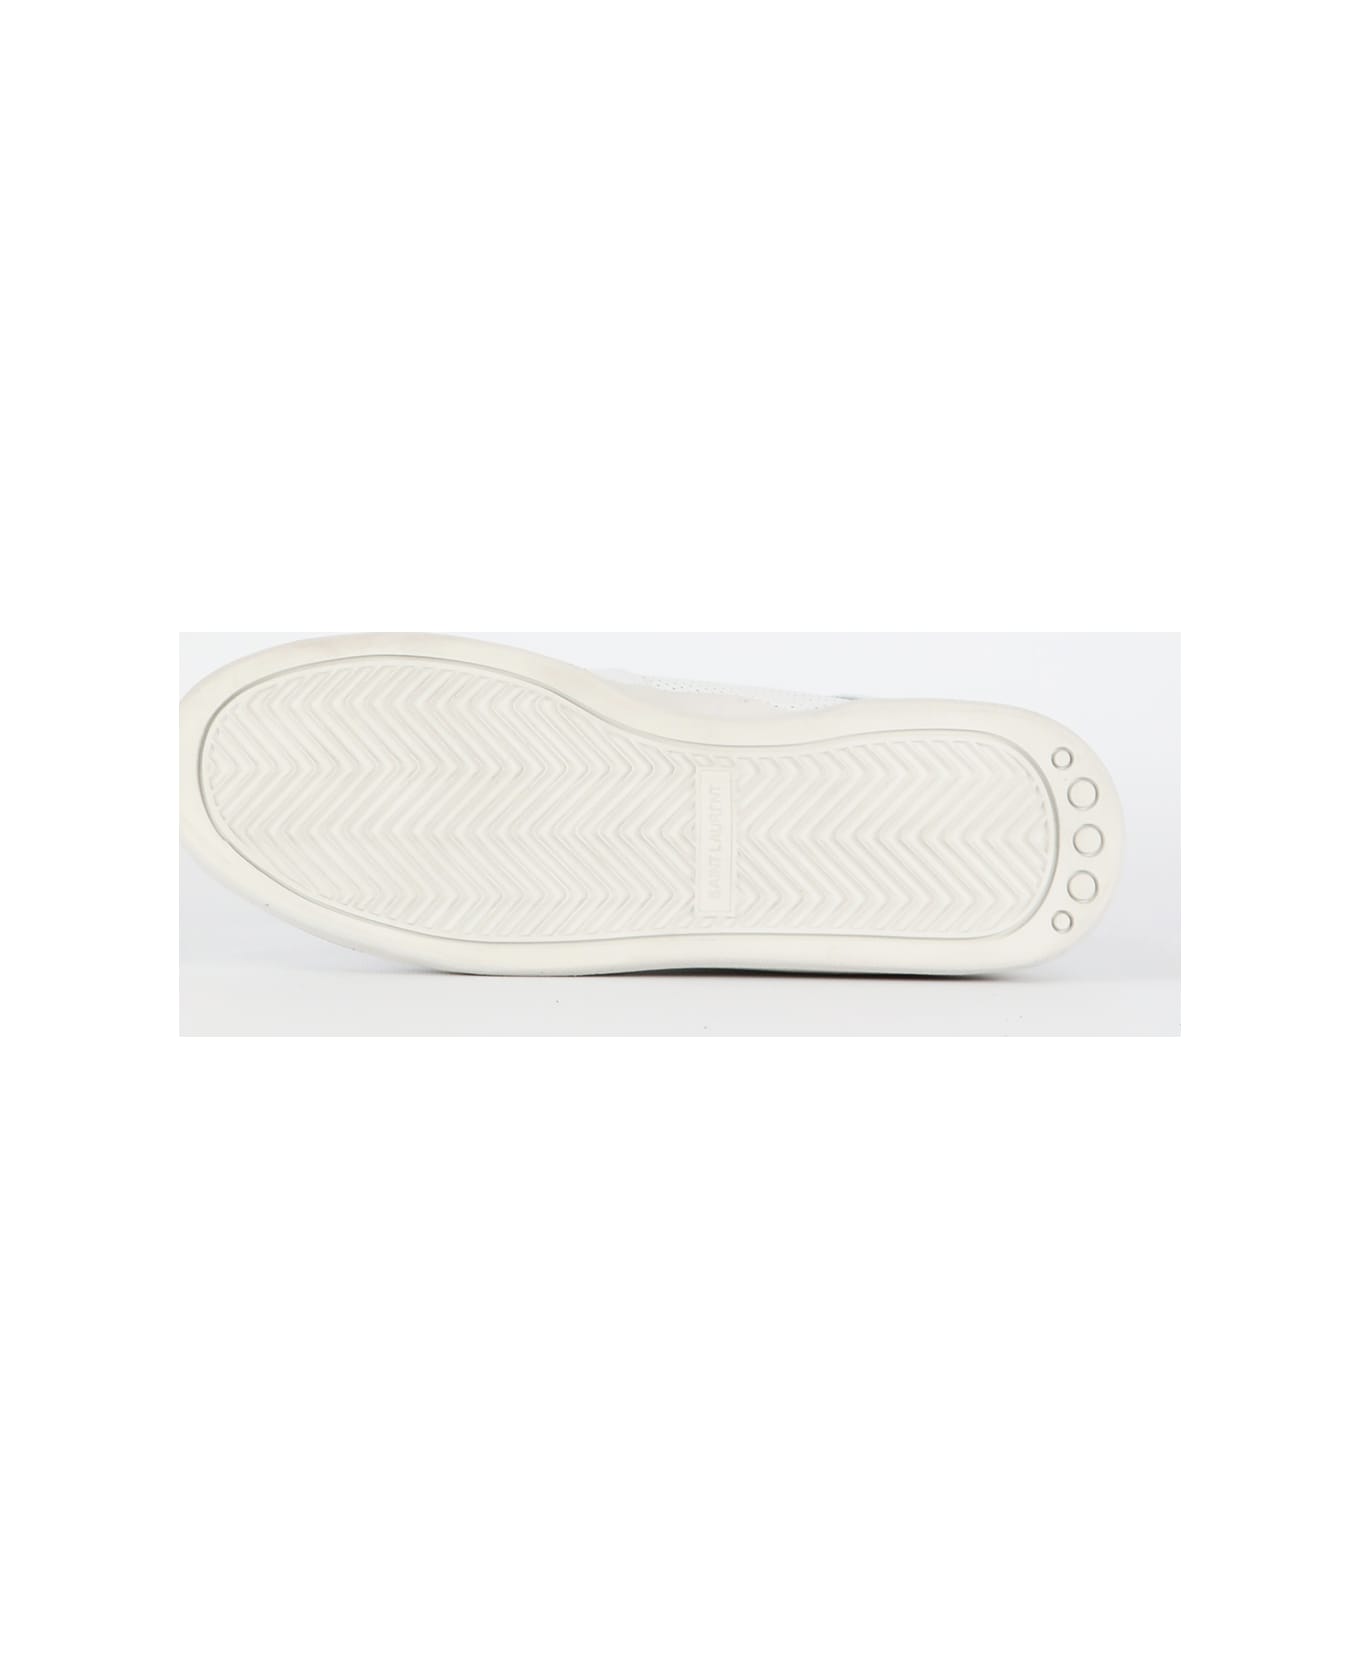 Saint Laurent Sl24 White Sneakers - White